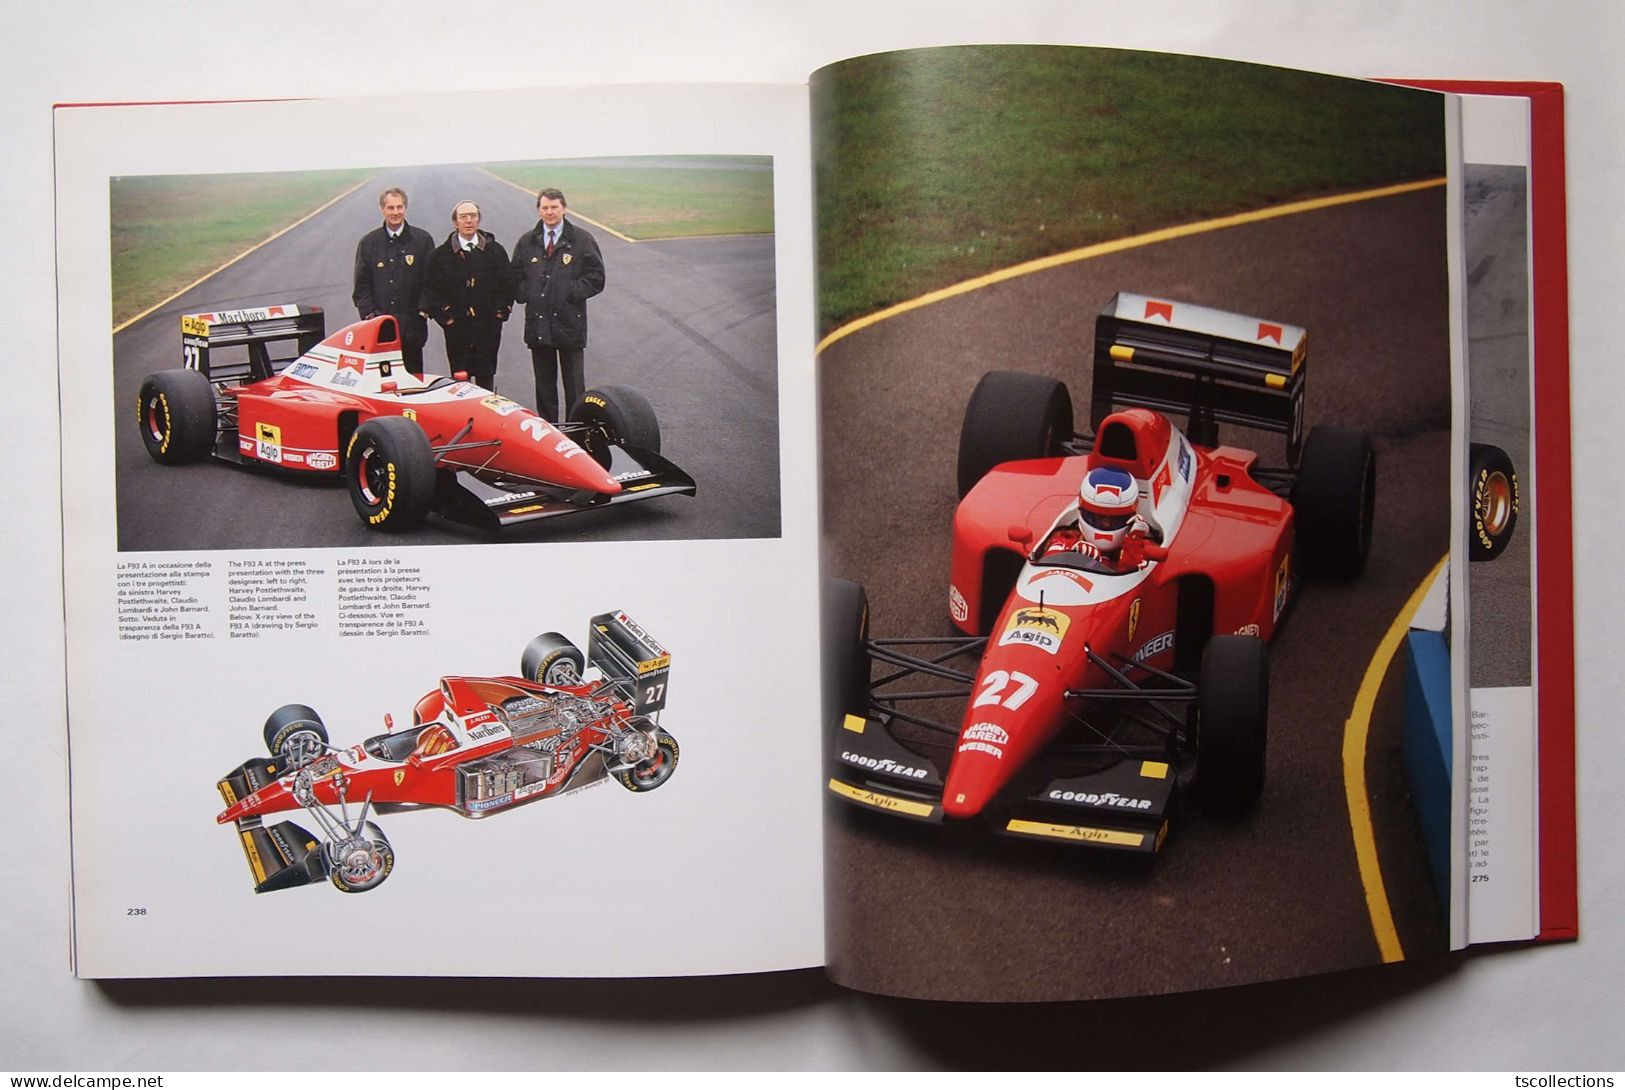 Ferrari Monoposto Catalogue Raisonné 1948 - 1997 - Automobilismo - F1